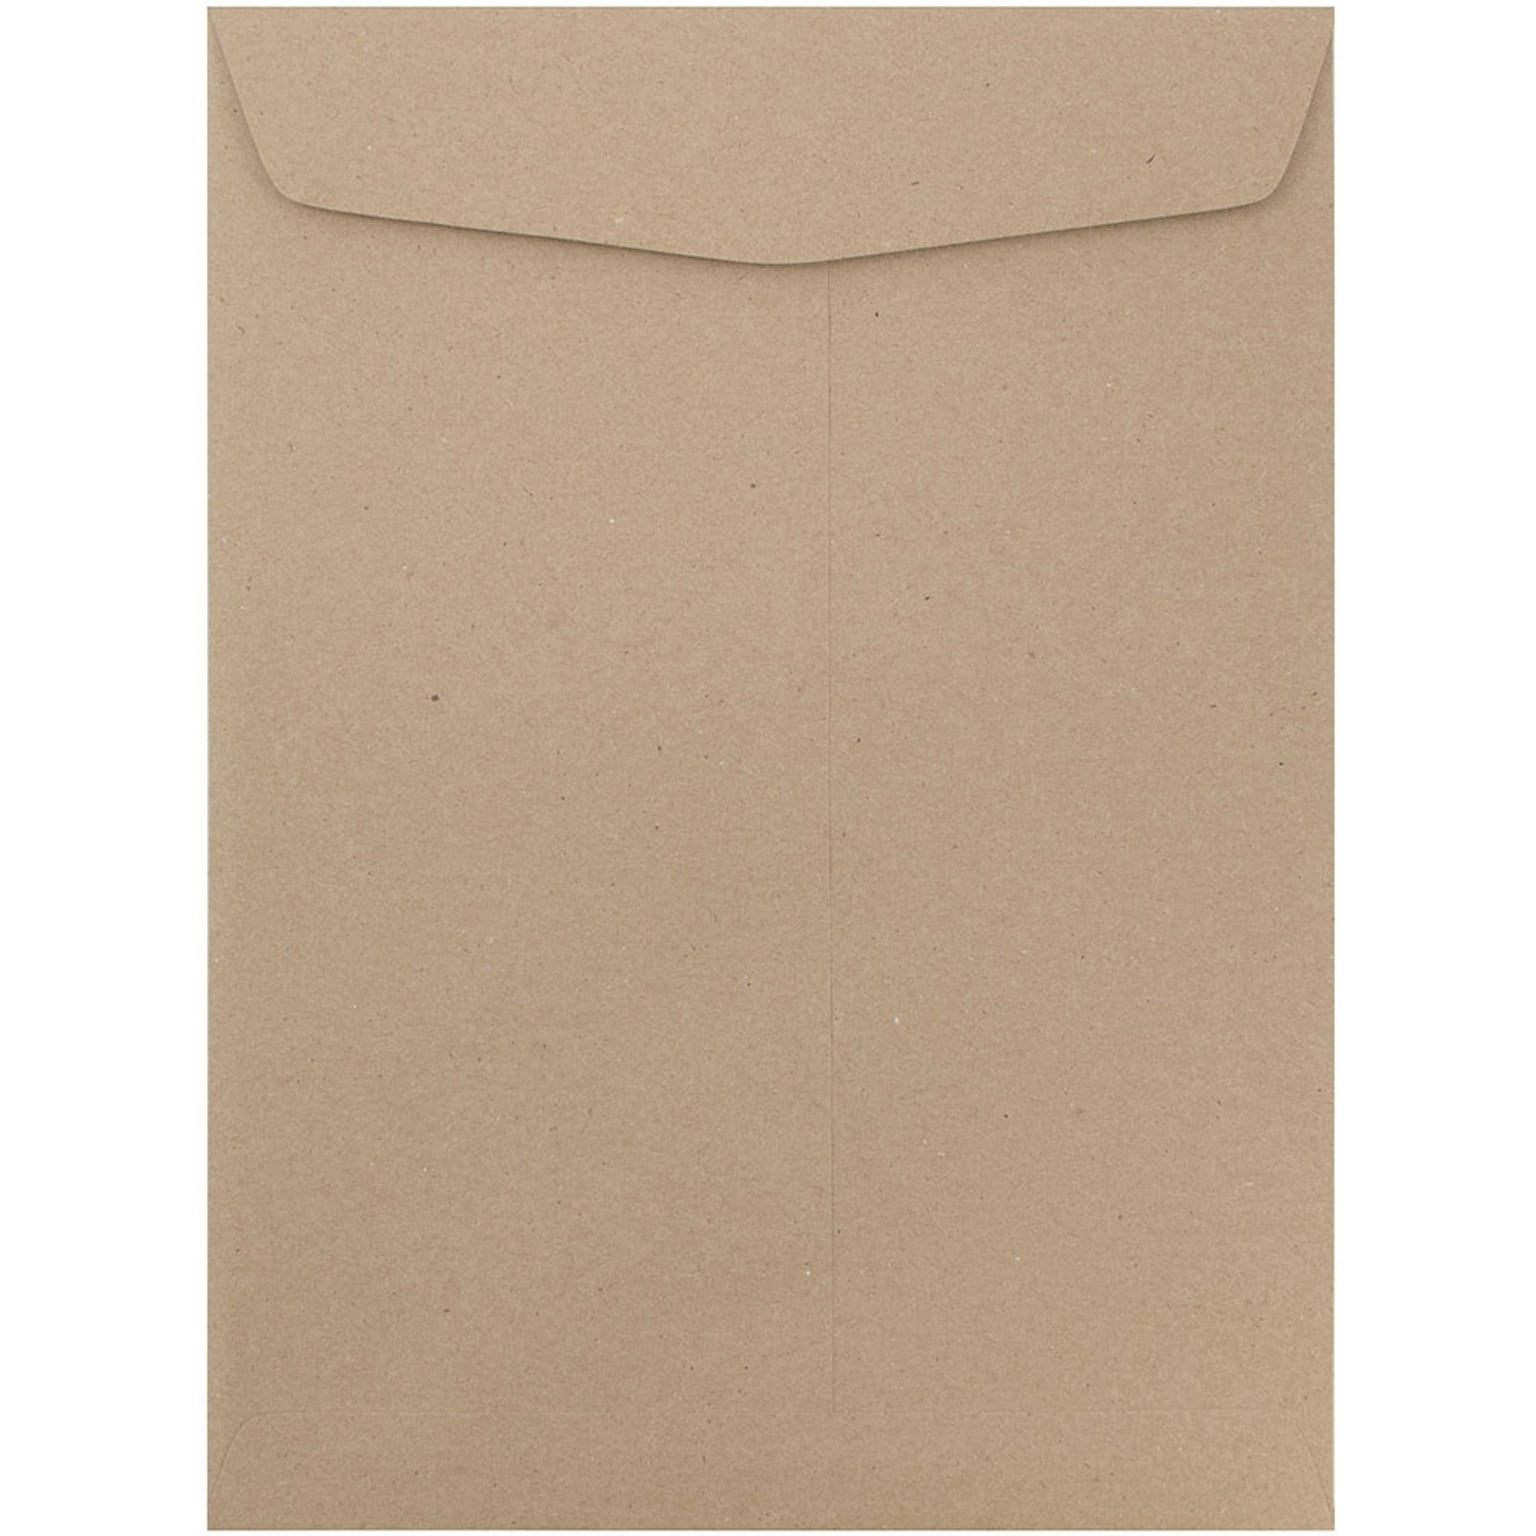 JAM Paper 10 x 13 Open End Catalog Envelopes, Brown Kraft Paper Bag, 10/Pack (6315603B)